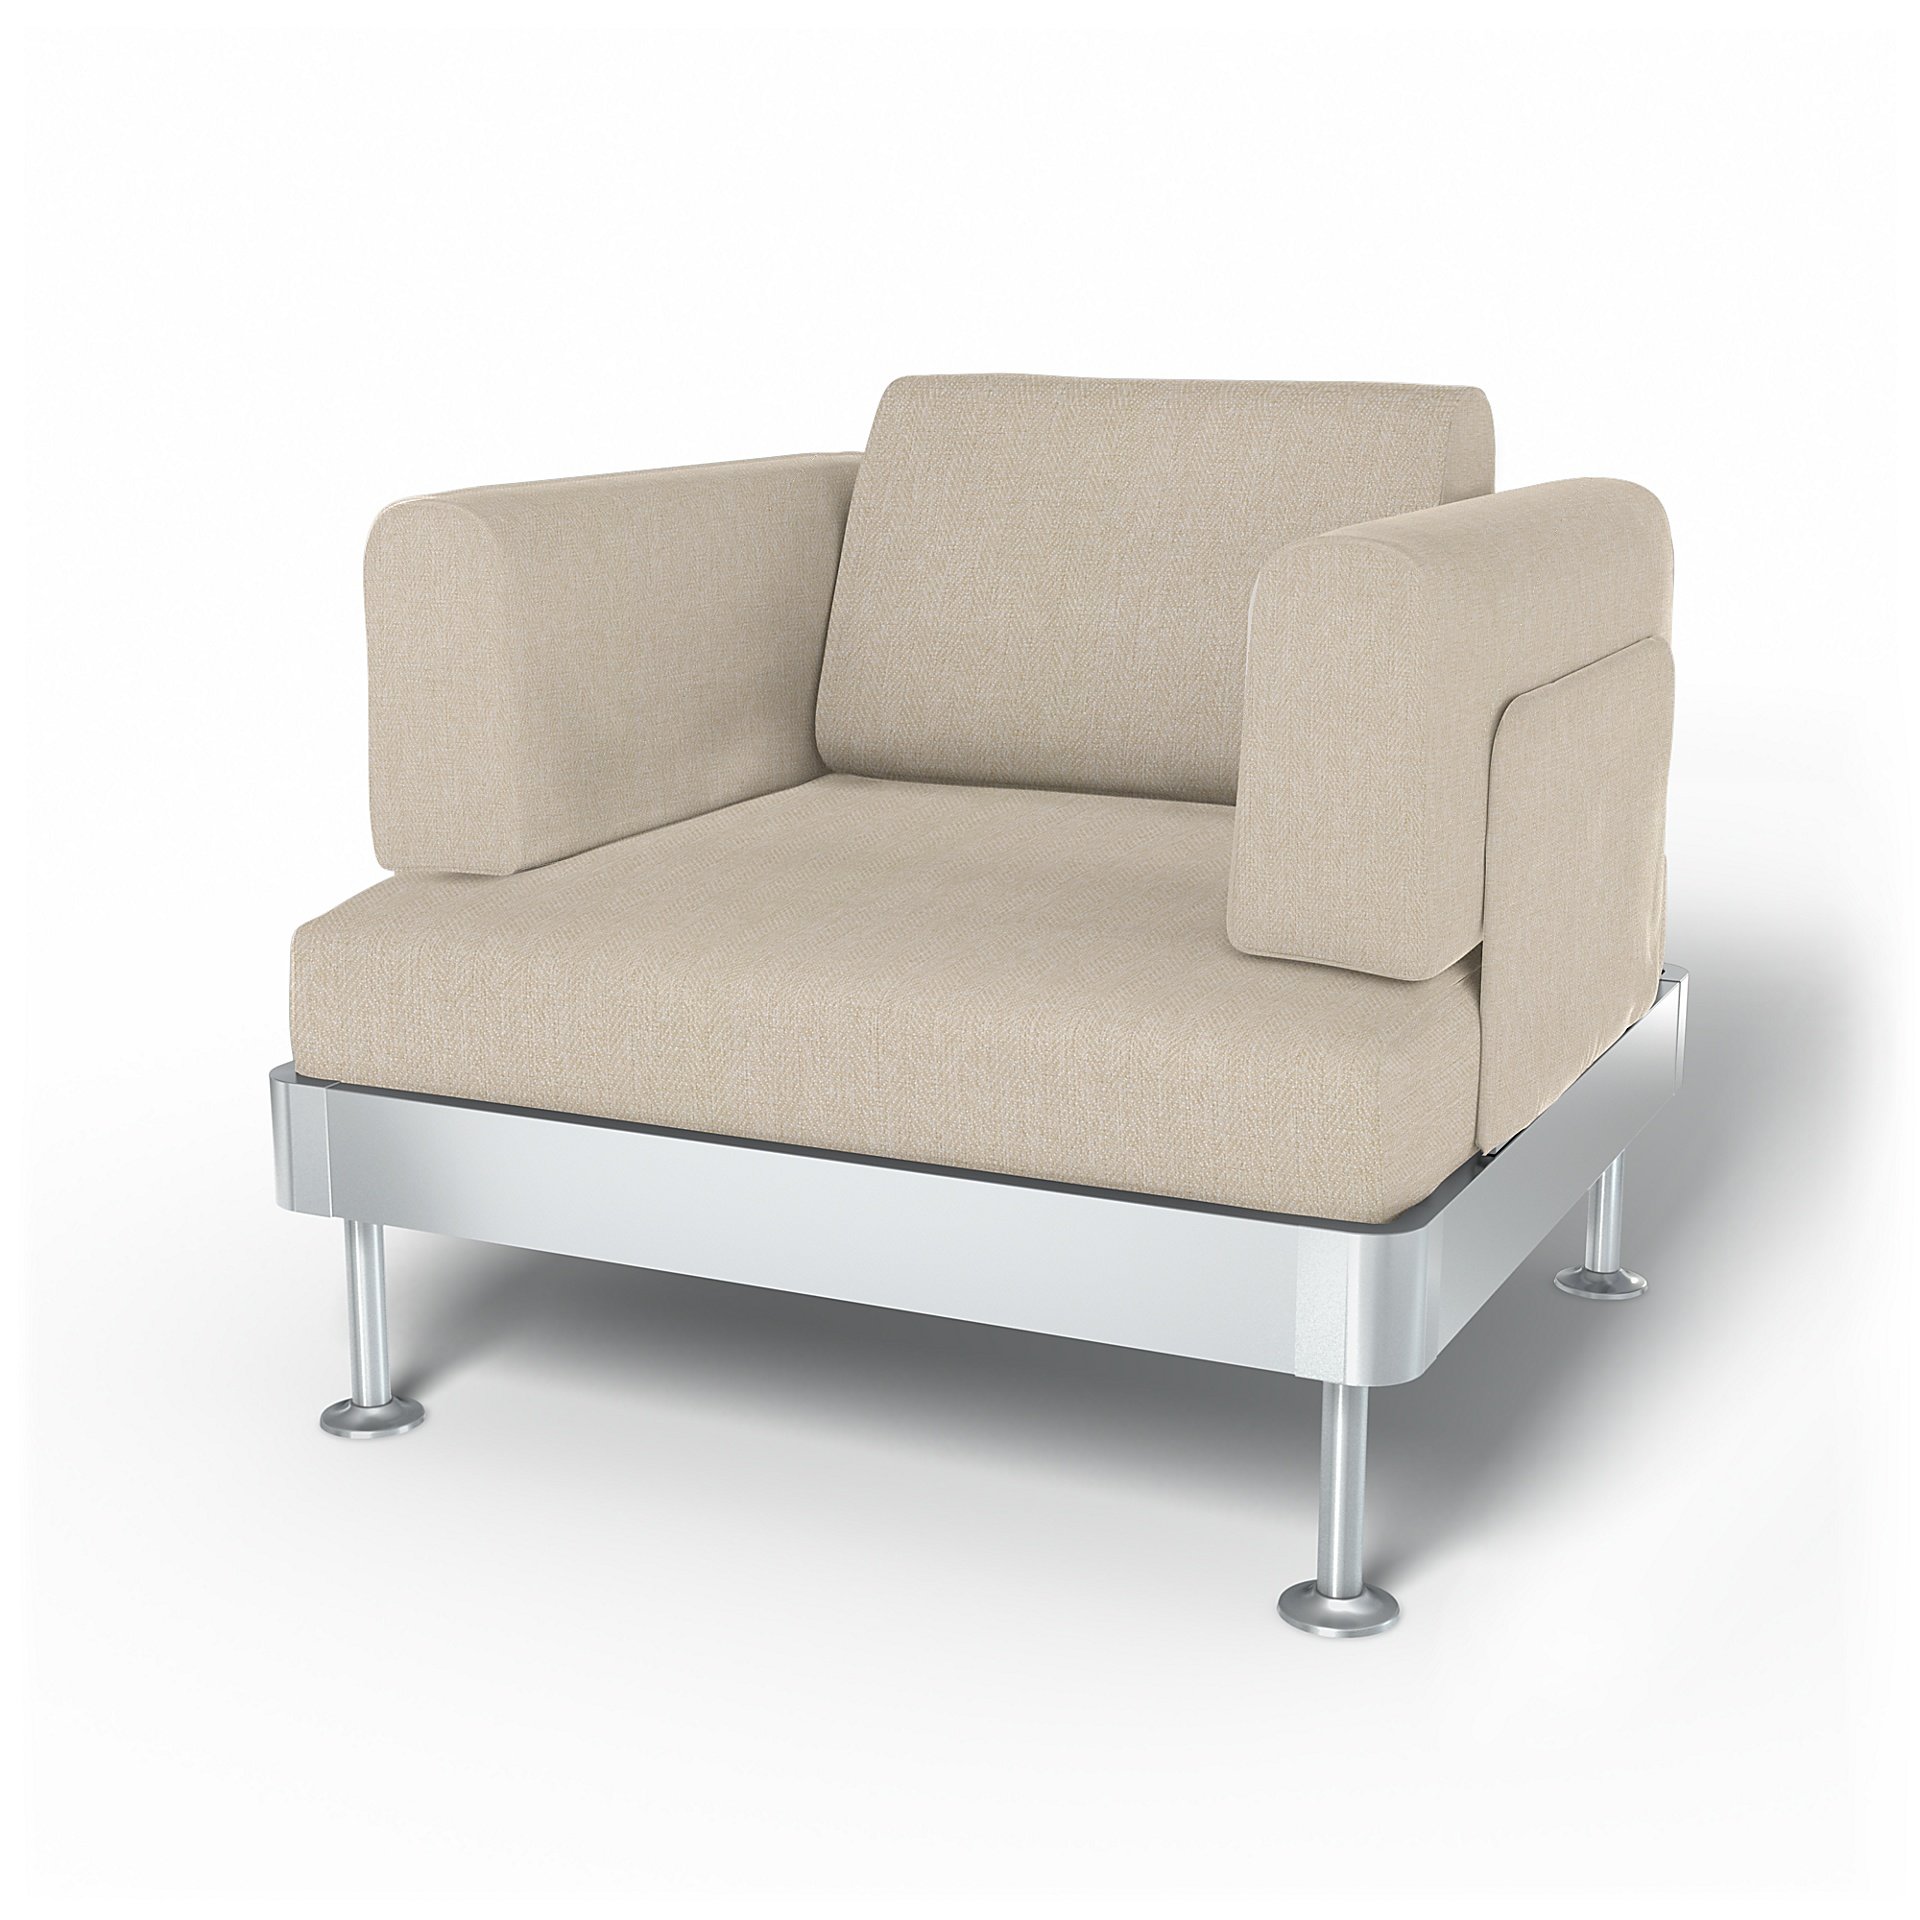 IKEA - Delaktig Armchair Cover, Natural, Boucle & Texture - Bemz